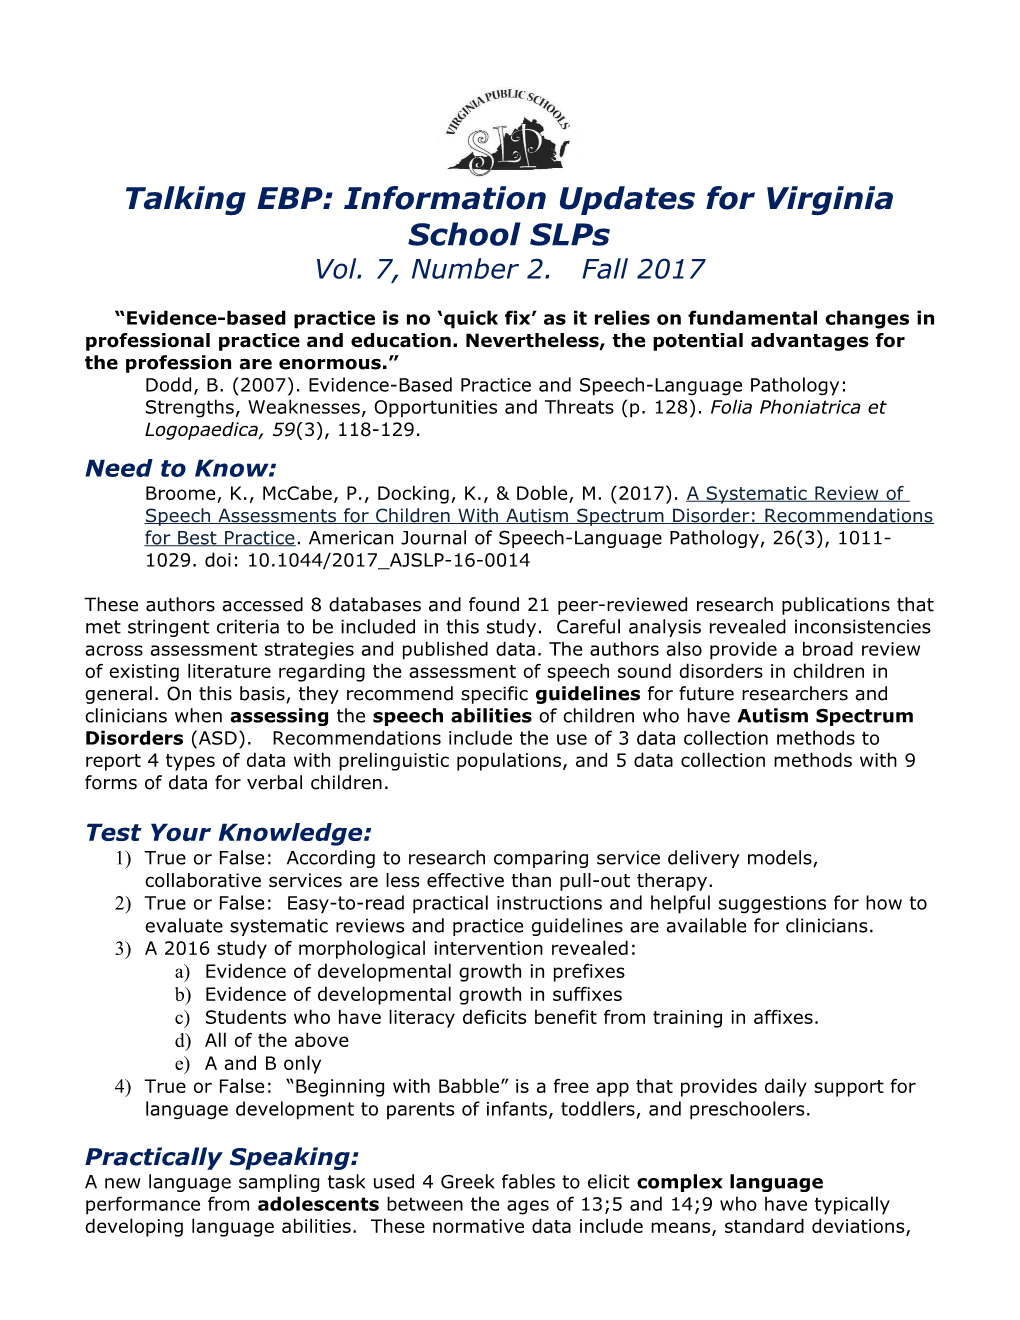 Talking EBP: Information Updates for Virginia School Slps